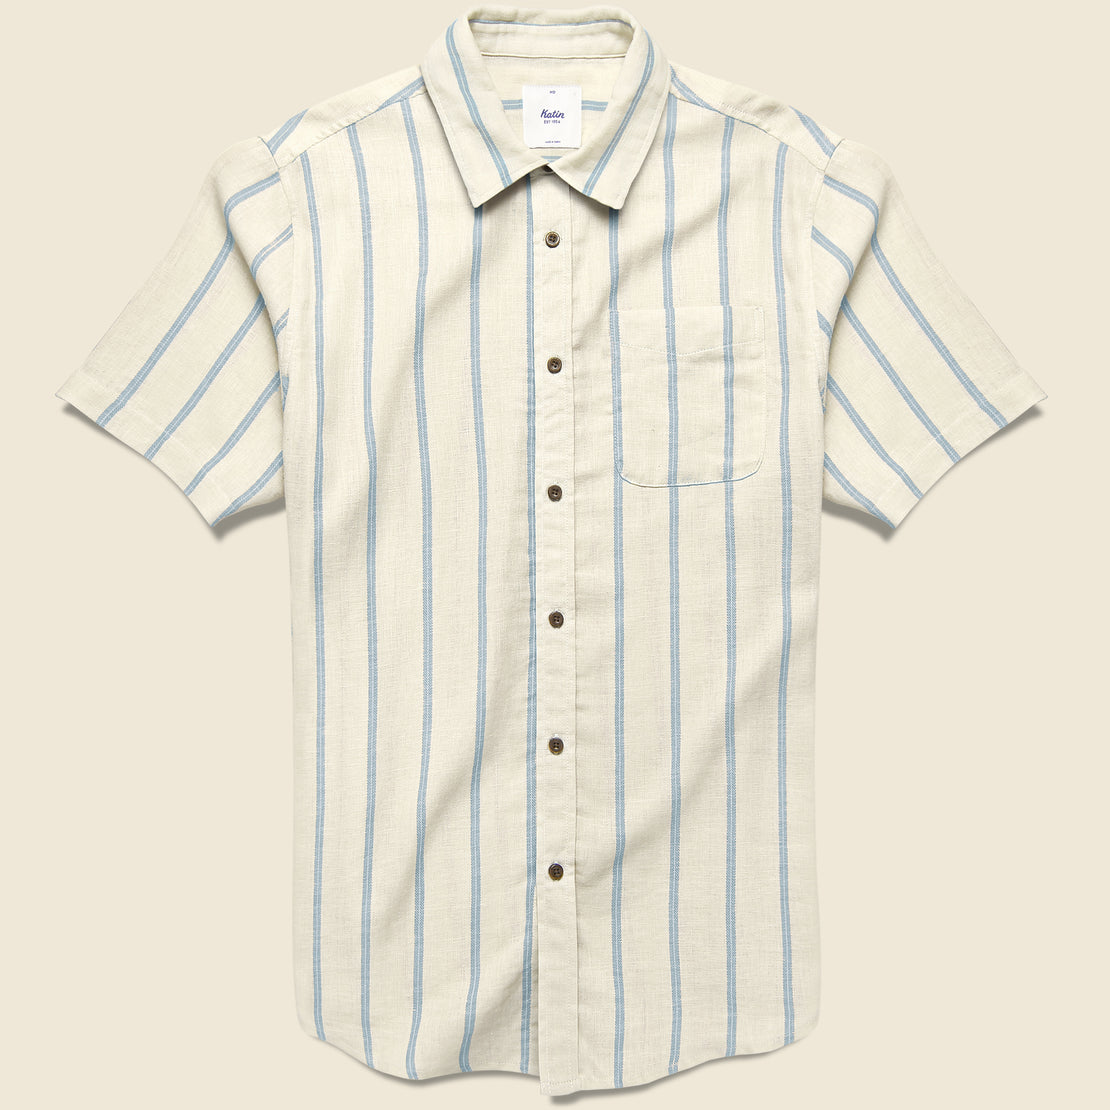 Katin Alan Shirt - Vintage White/Light Blue